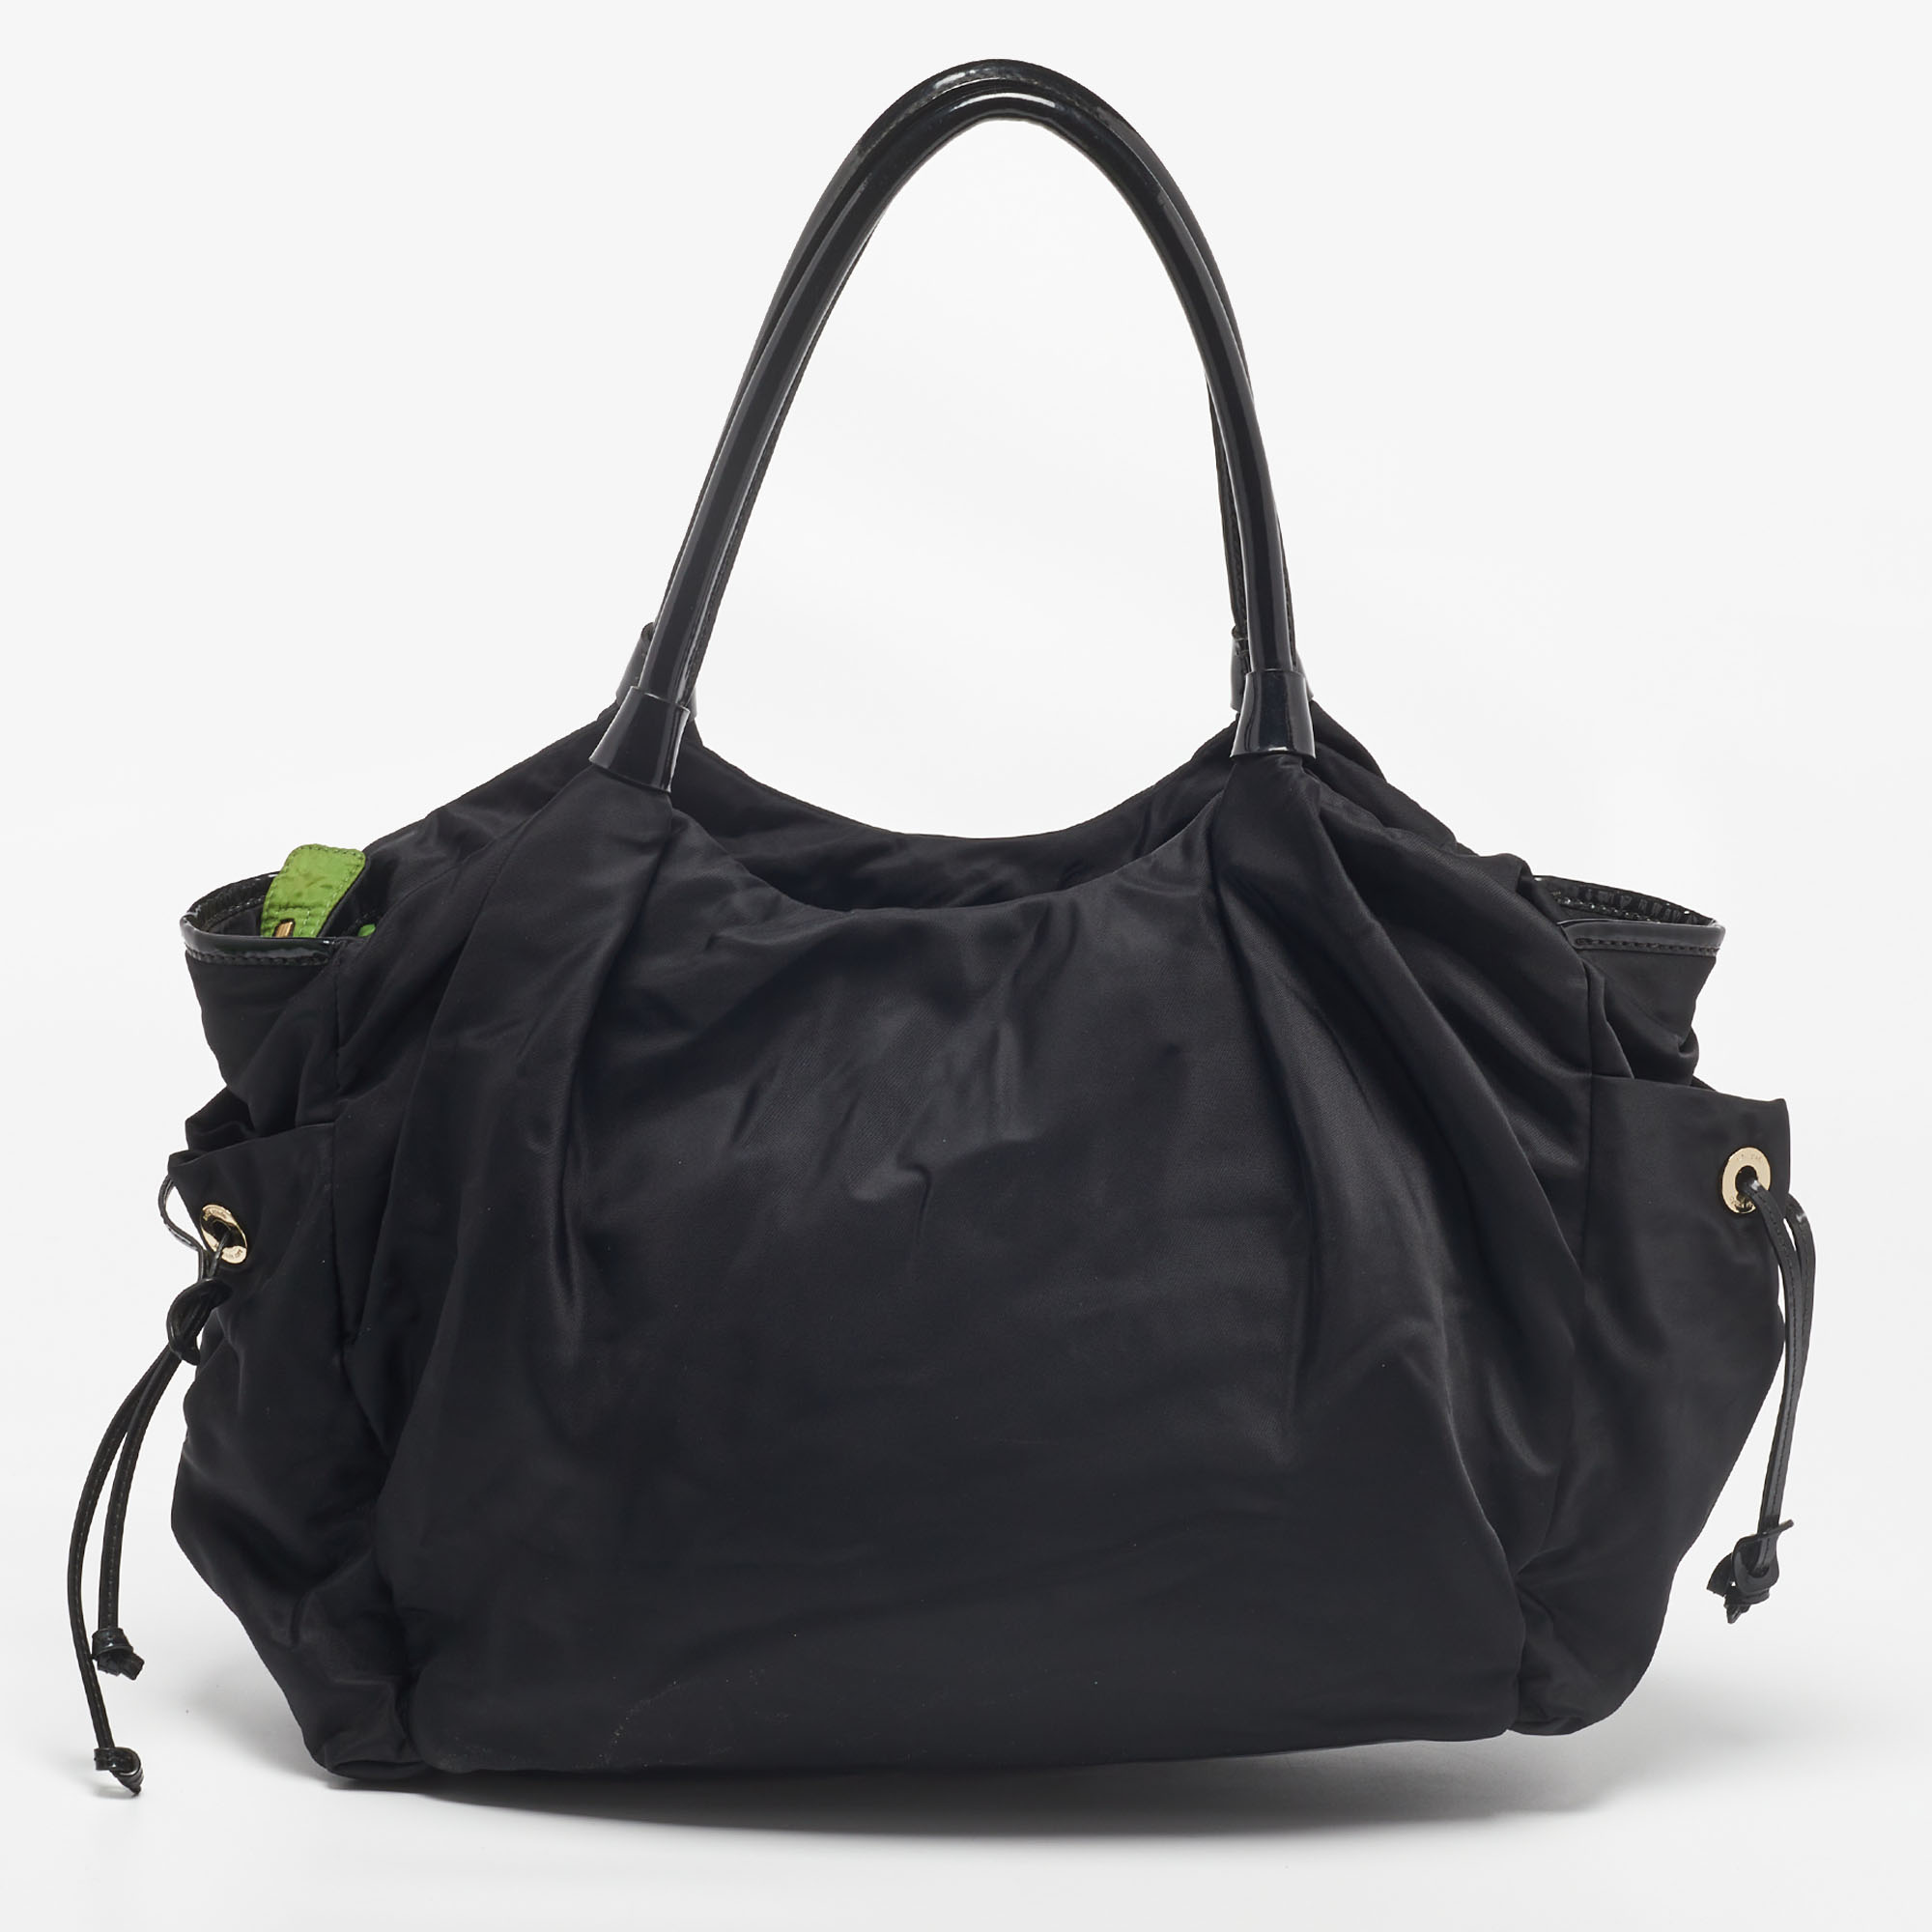 Kate Spade Black Nylon And Patent Leather Stevie Diaper Bag